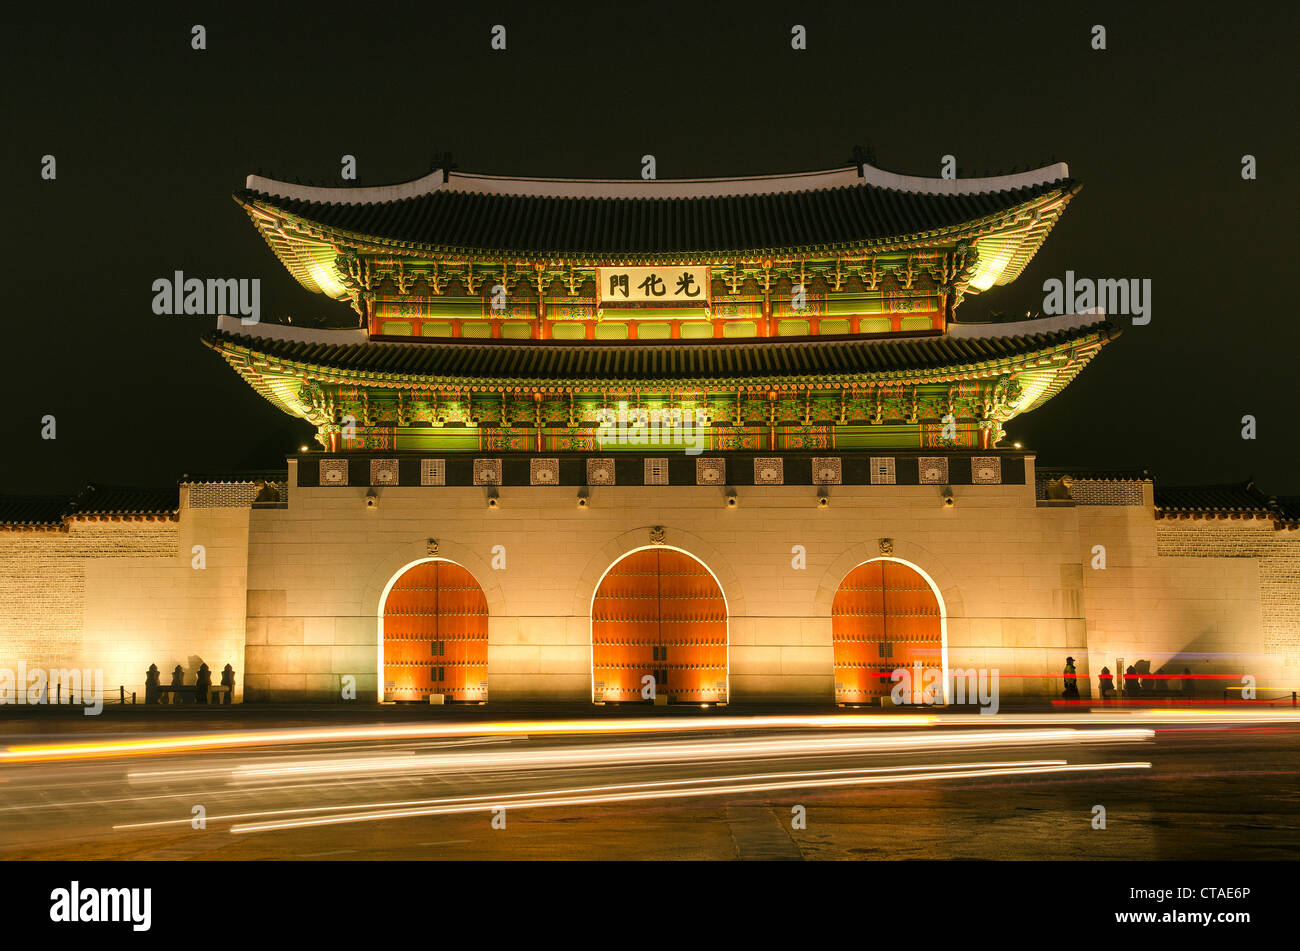 Gwanghwamun gate of Gyeongbokgung palace in seoul south korea at night Stock Photo